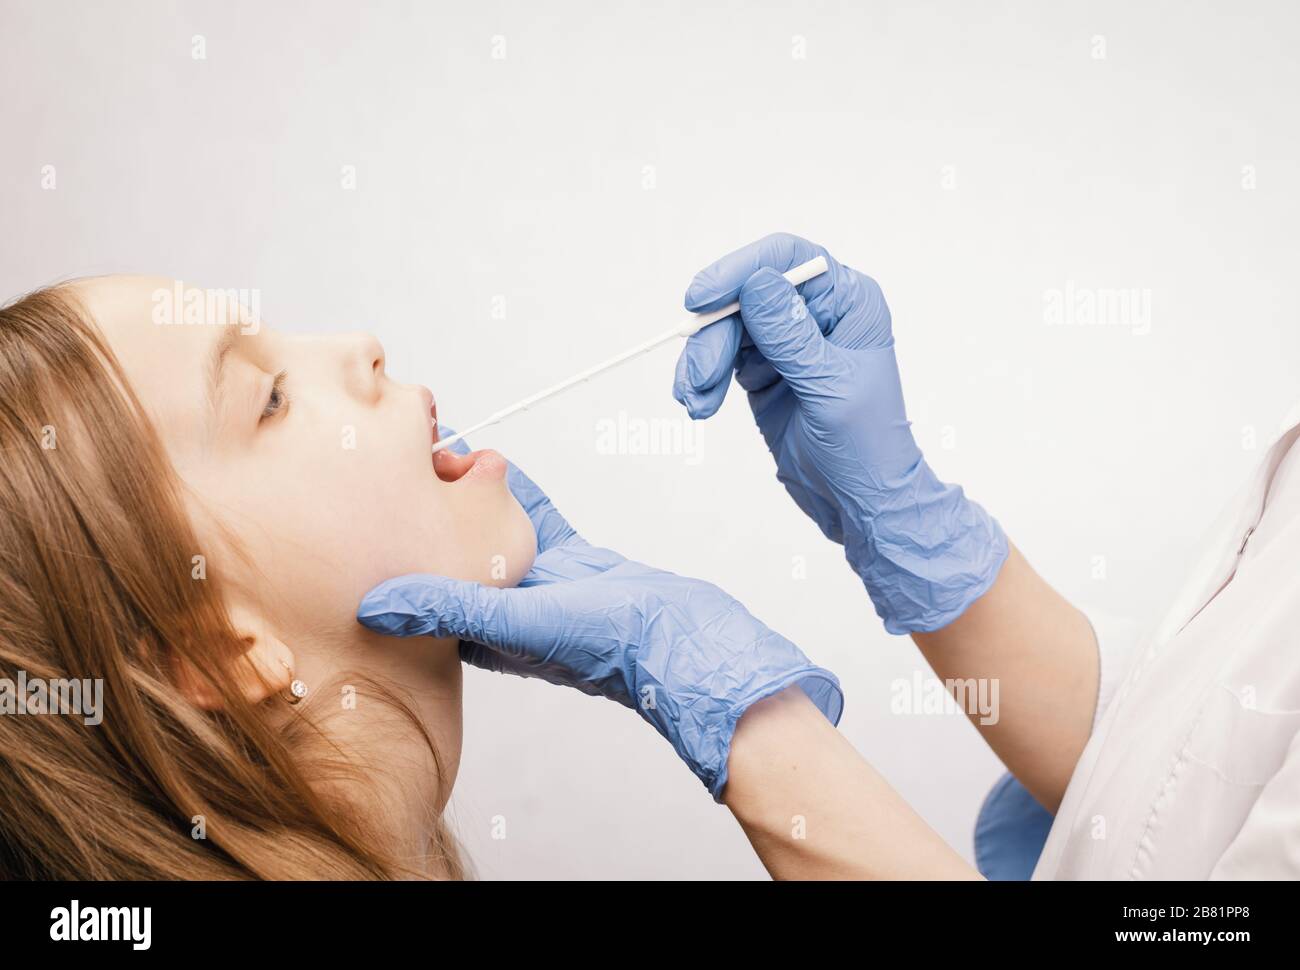 Pediatrician or doctor taking saliva test sample fom elementary age girl's lips performing Saliva testing (Salivaomics)  diagnostic procedure Stock Photo